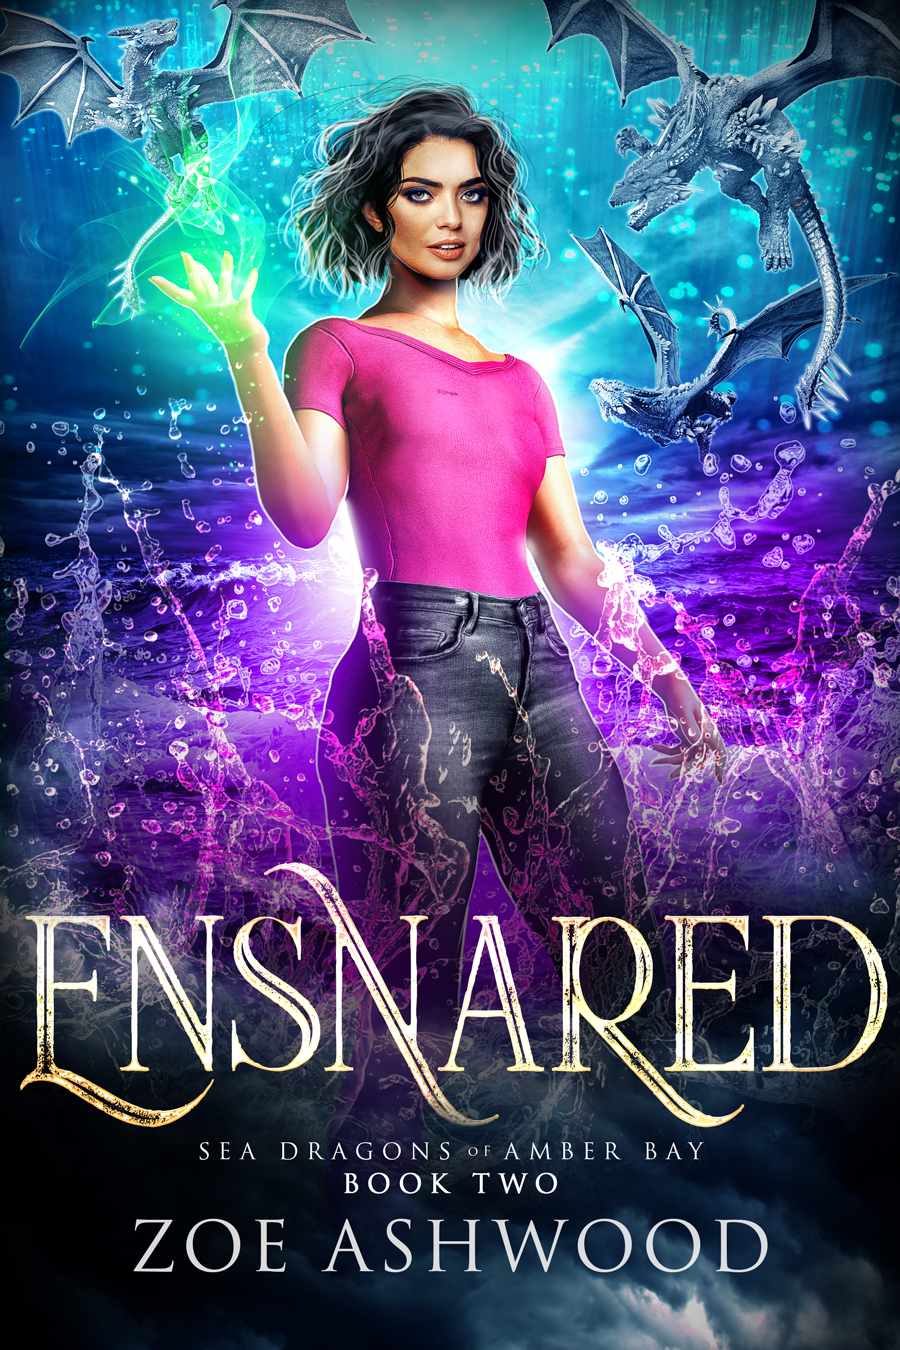 Ensnared - a Reverse Harem Paranormal Romance by Zoe Ashwood (Sea Dragons of Amber Bay #2)